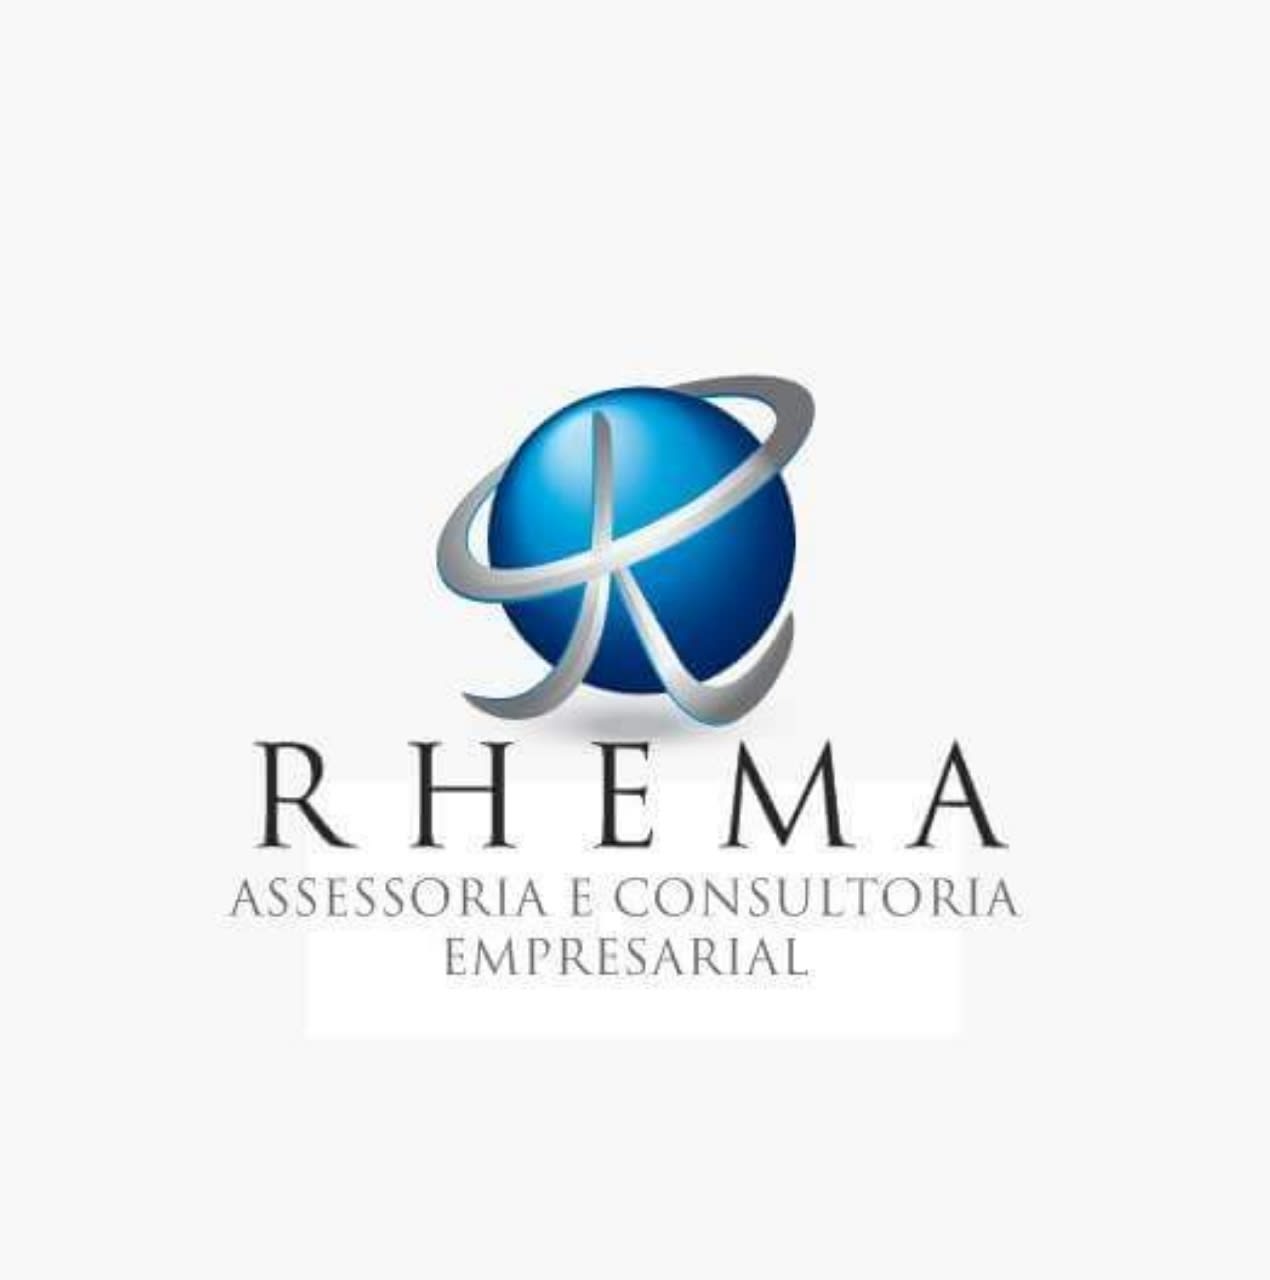 Rhema Assessoria & Consultoria Empresarial